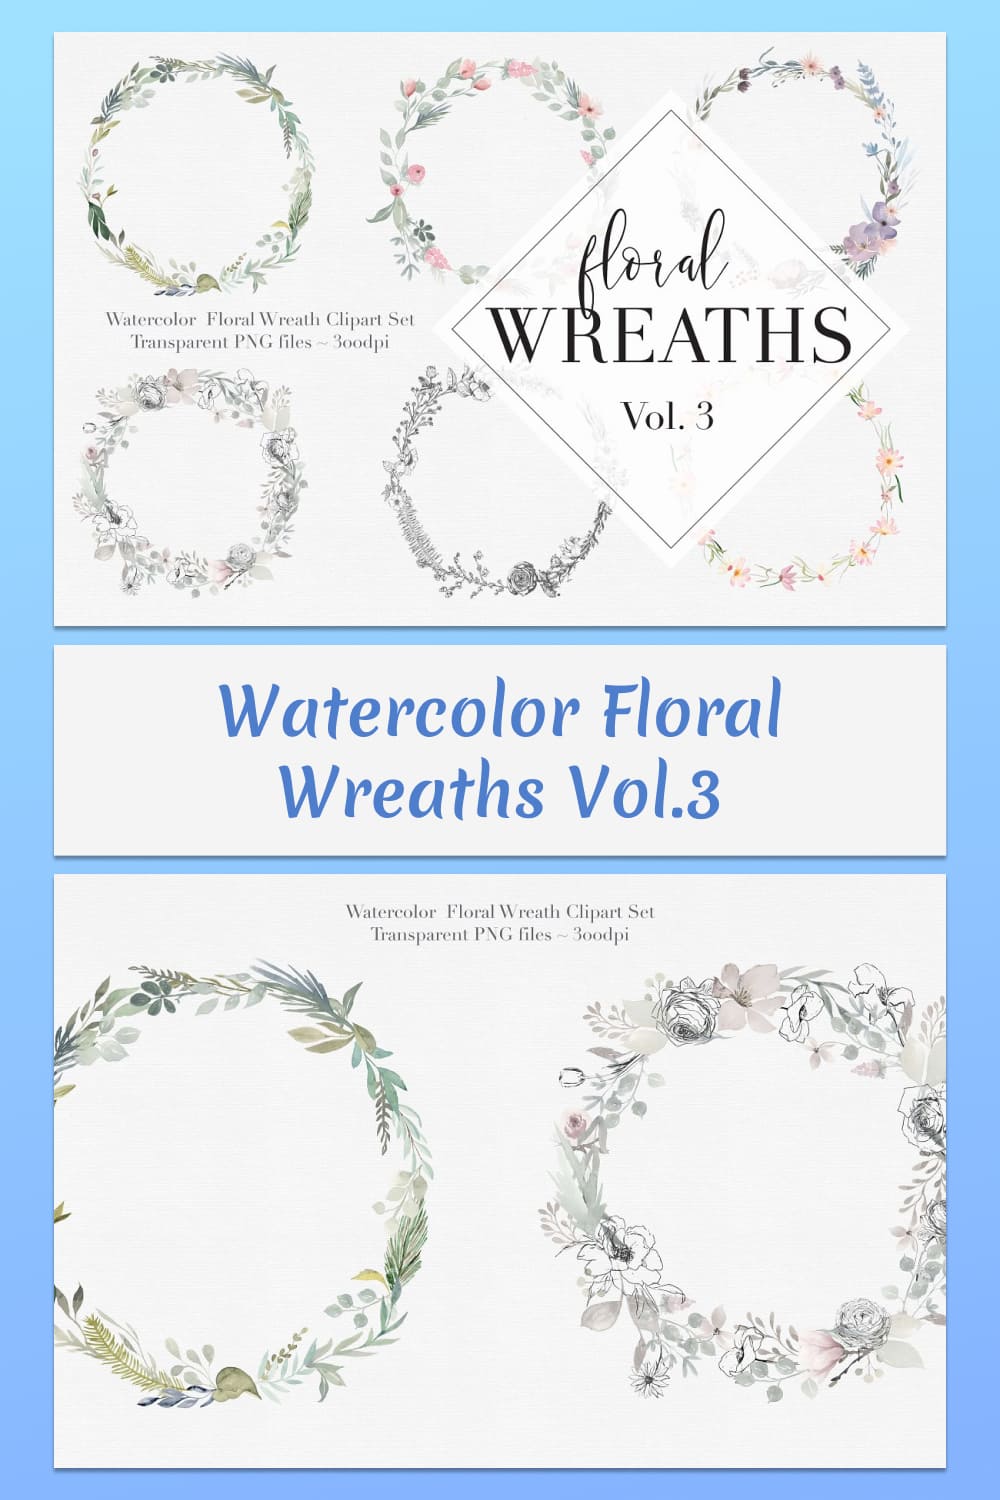 watercolor floral wreaths handdrawn art.